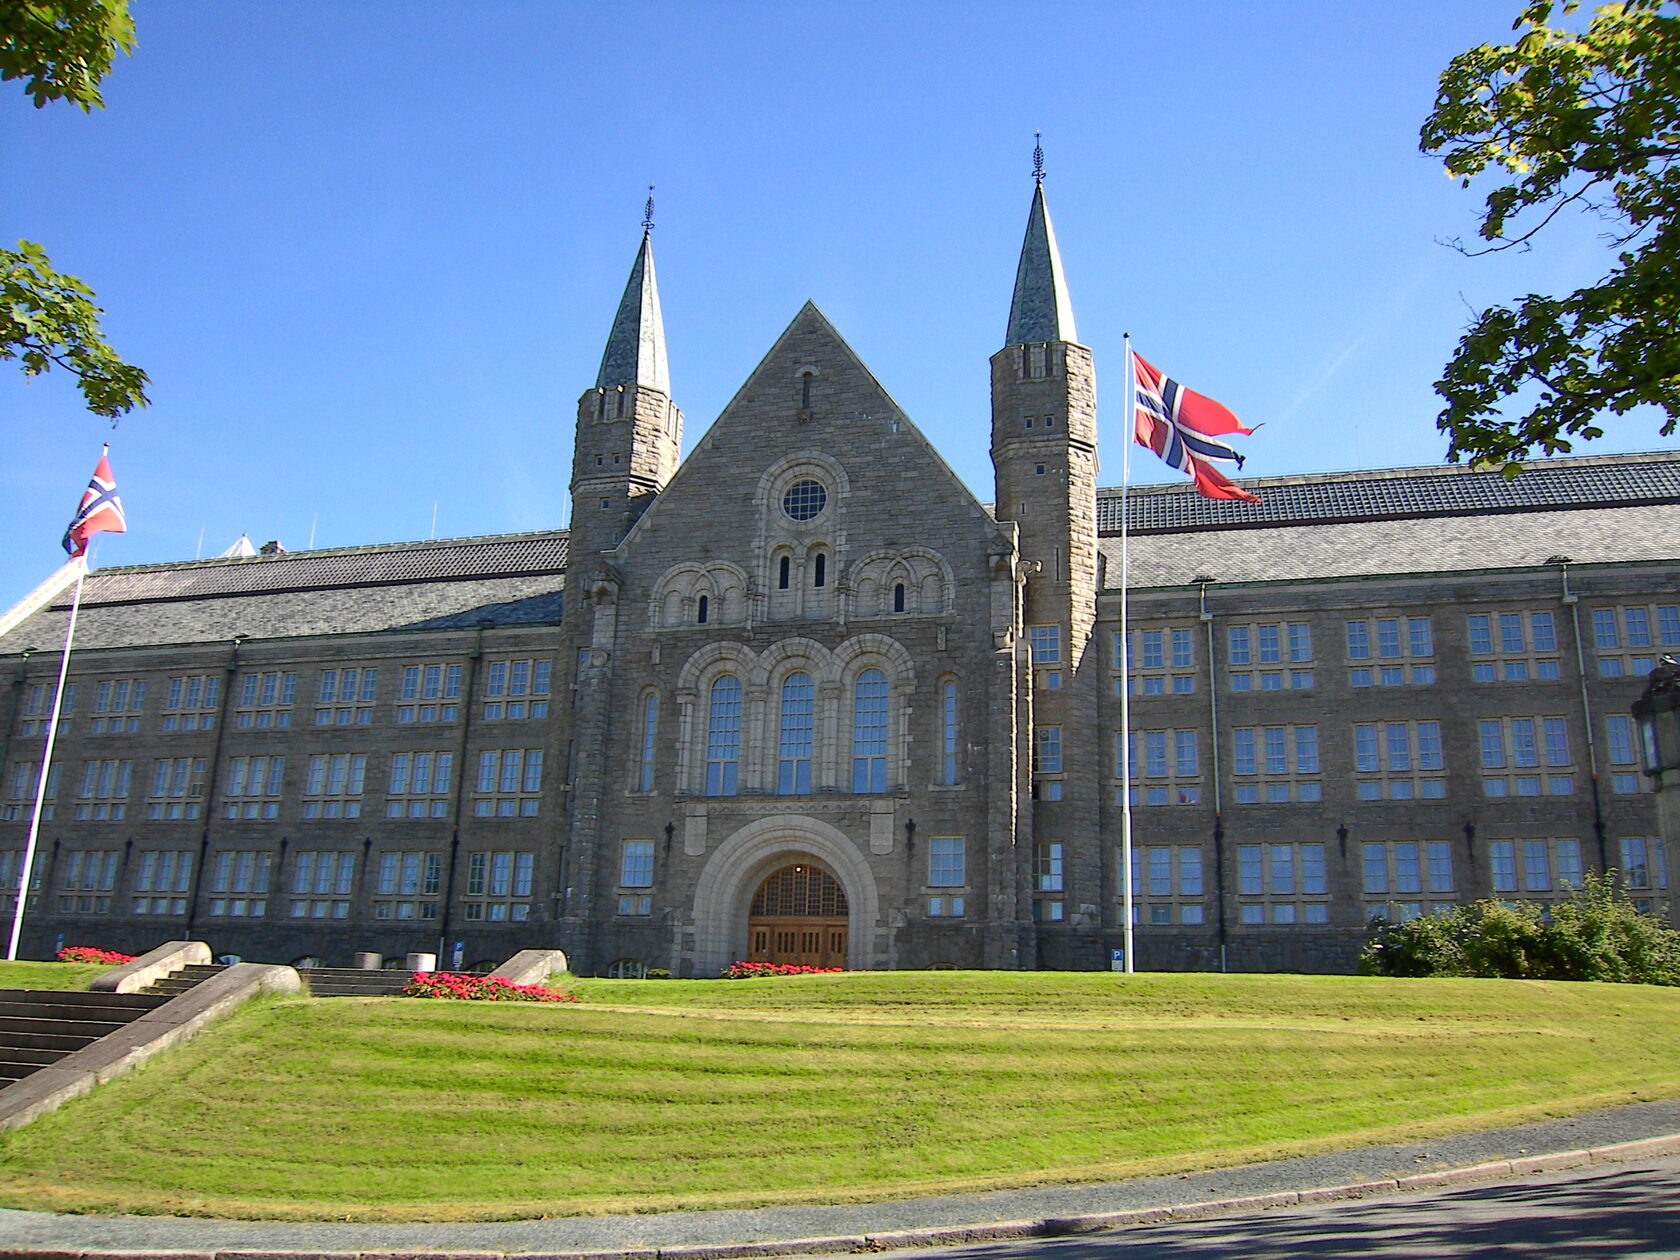 NTNU Norwegian University of Science and Technology